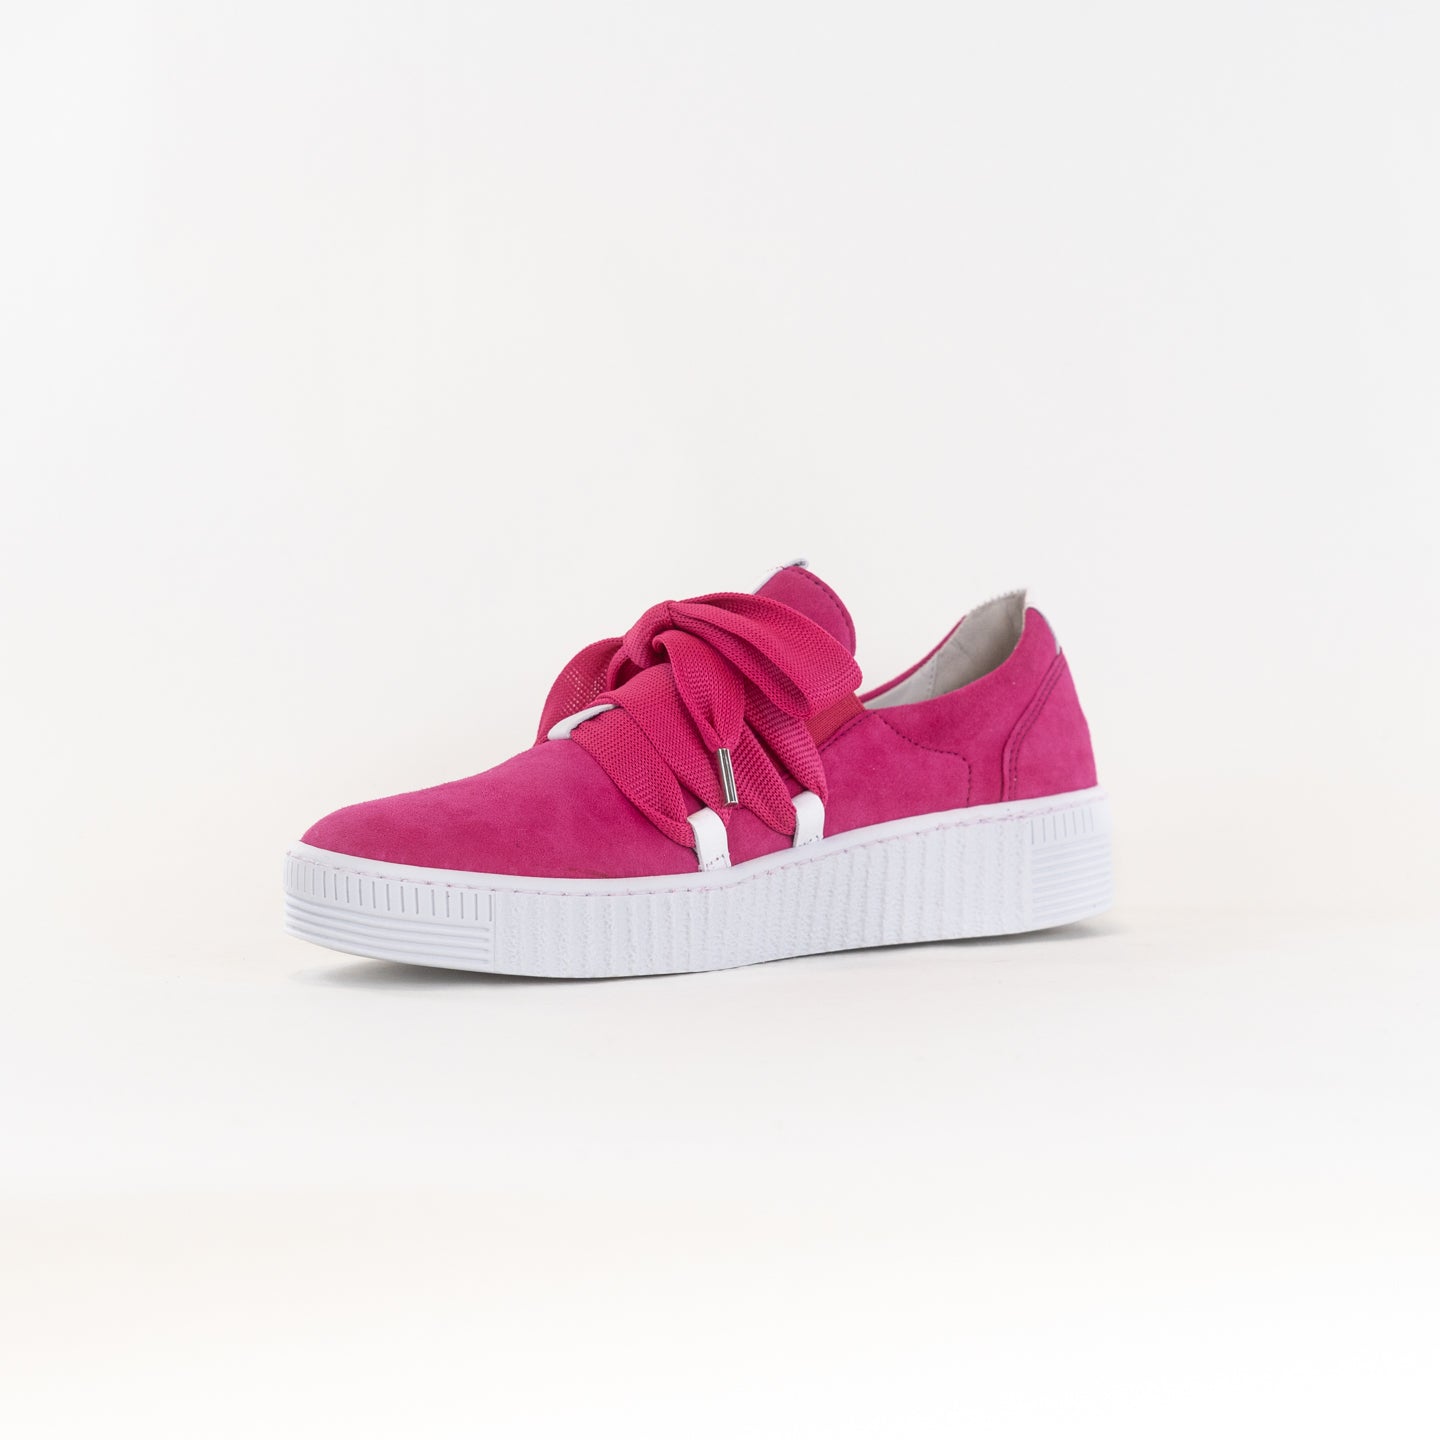 Gabor A1 Sneaker 333.10 (Women's) - Pink